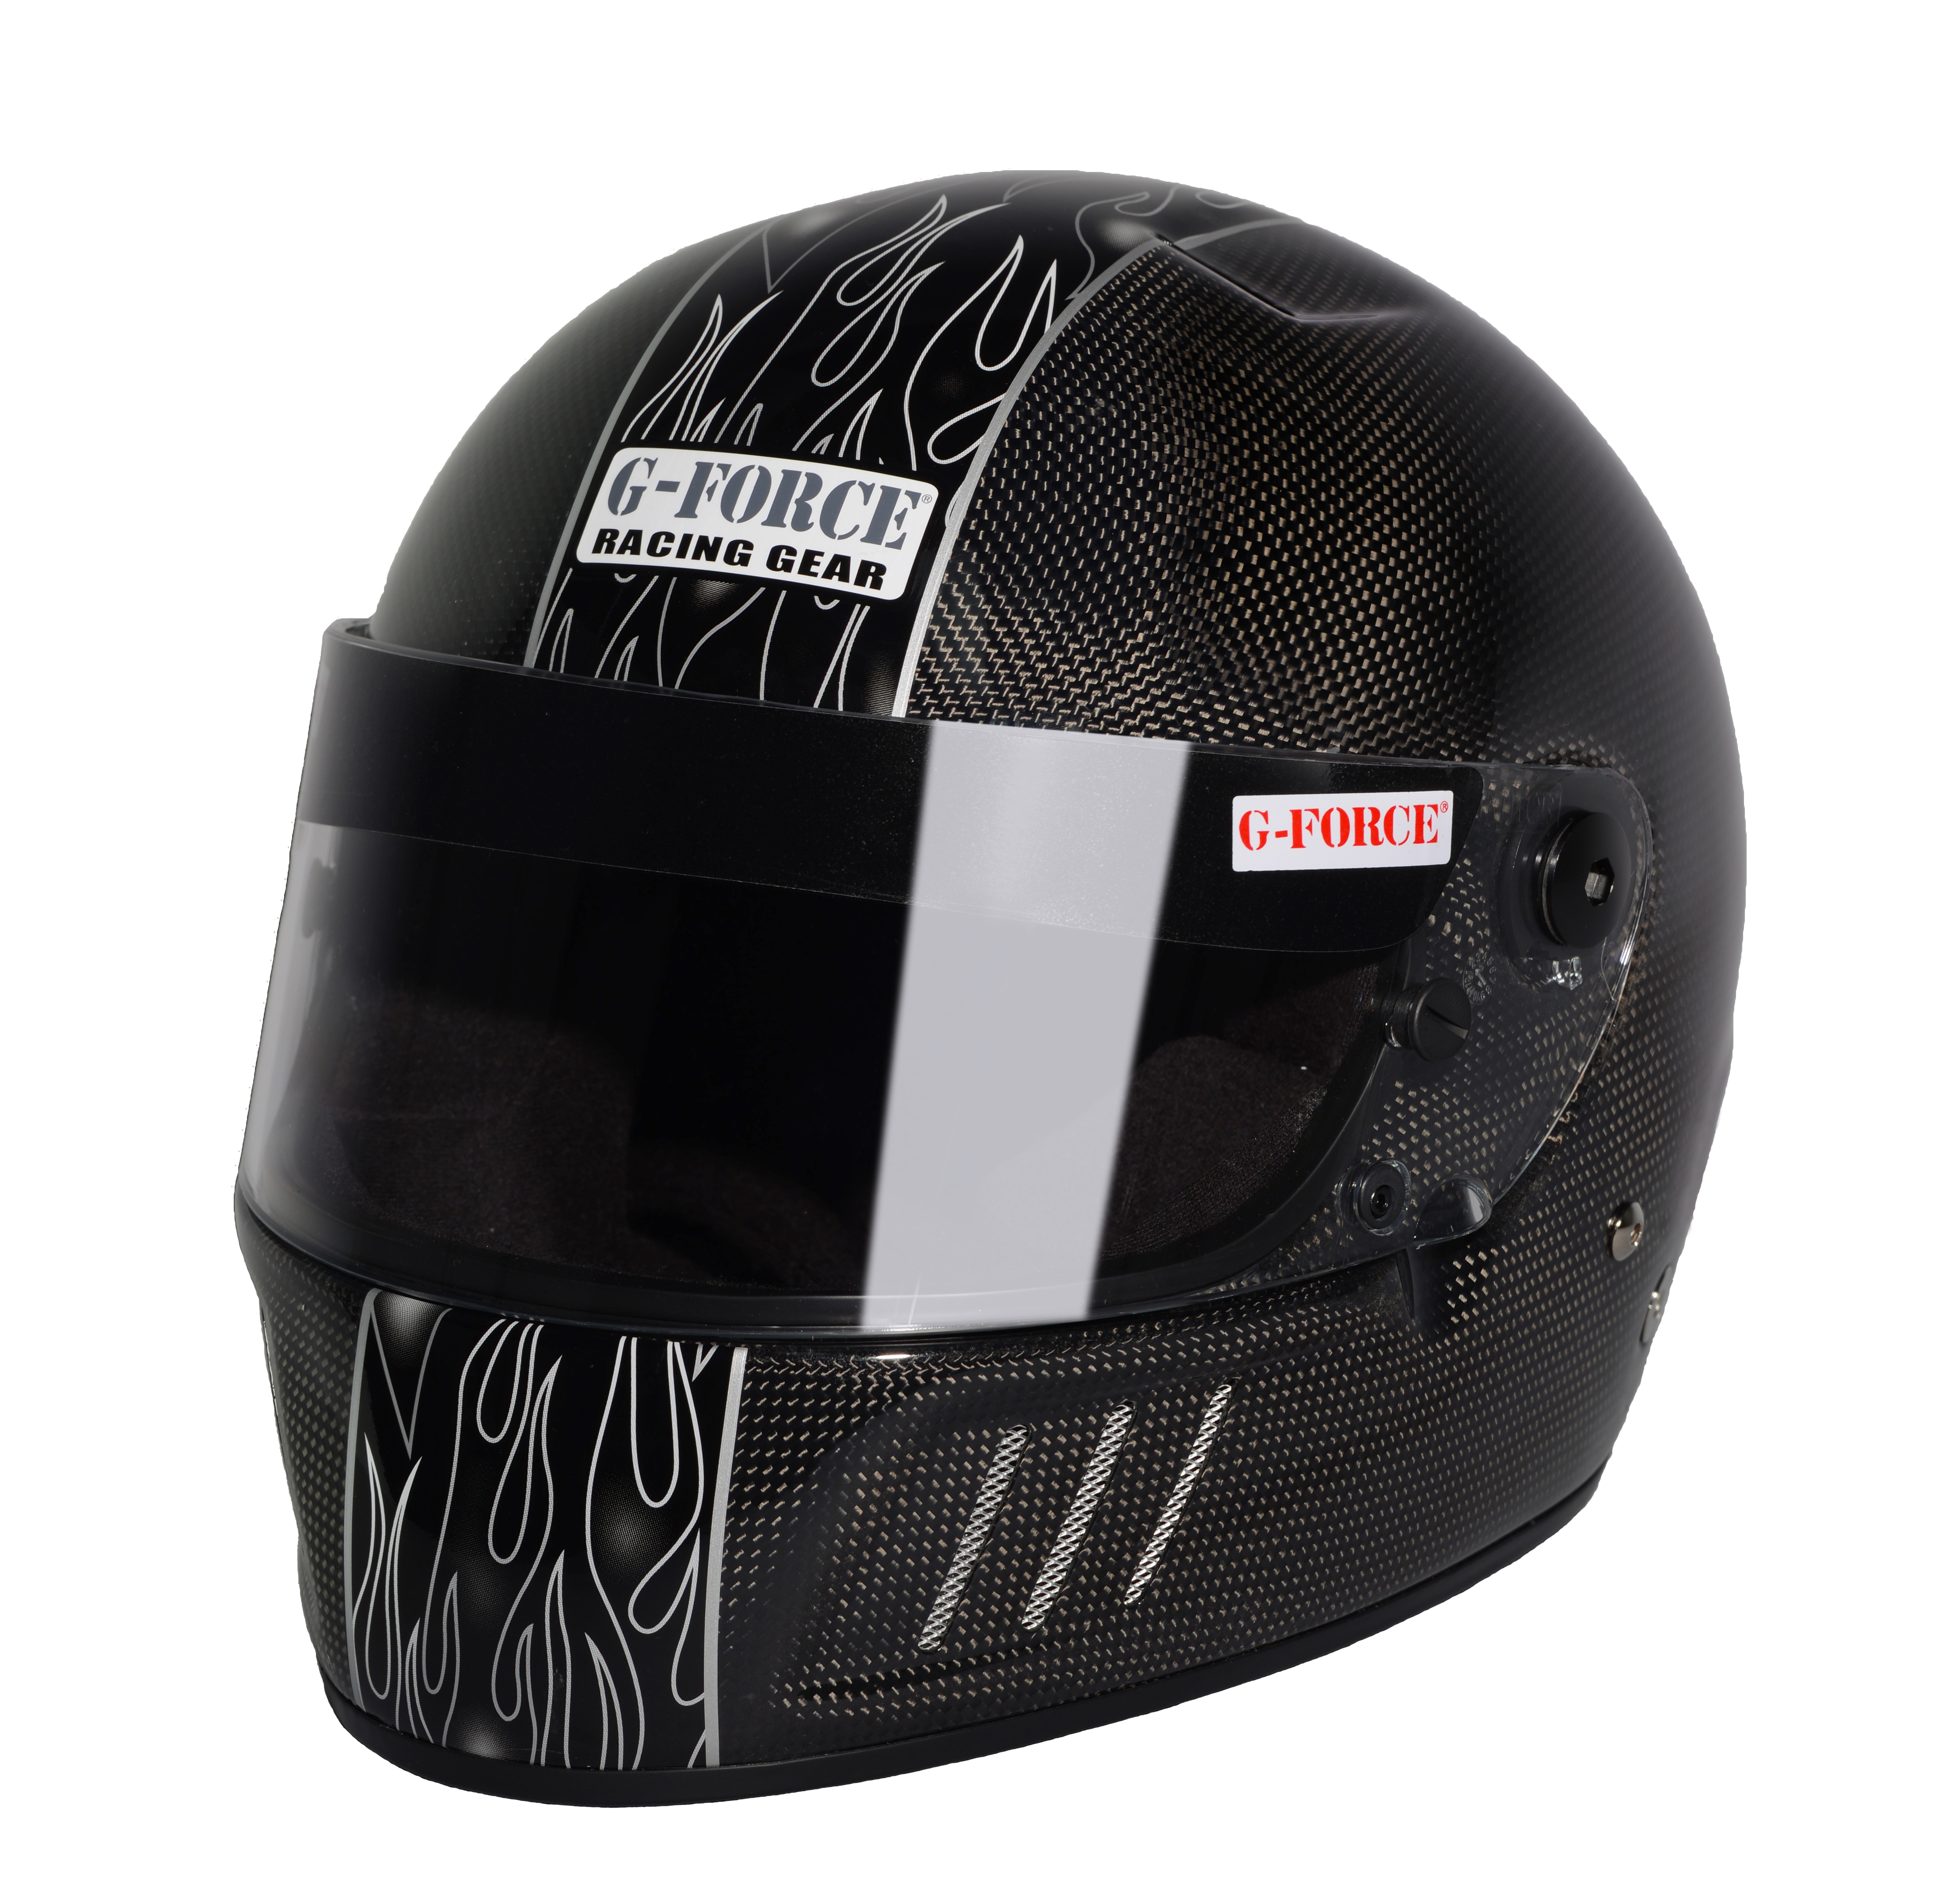 G-Force Racing Gear Helmet, PRO CFG SA2010 FULL FACE XX-LARGE BLACK